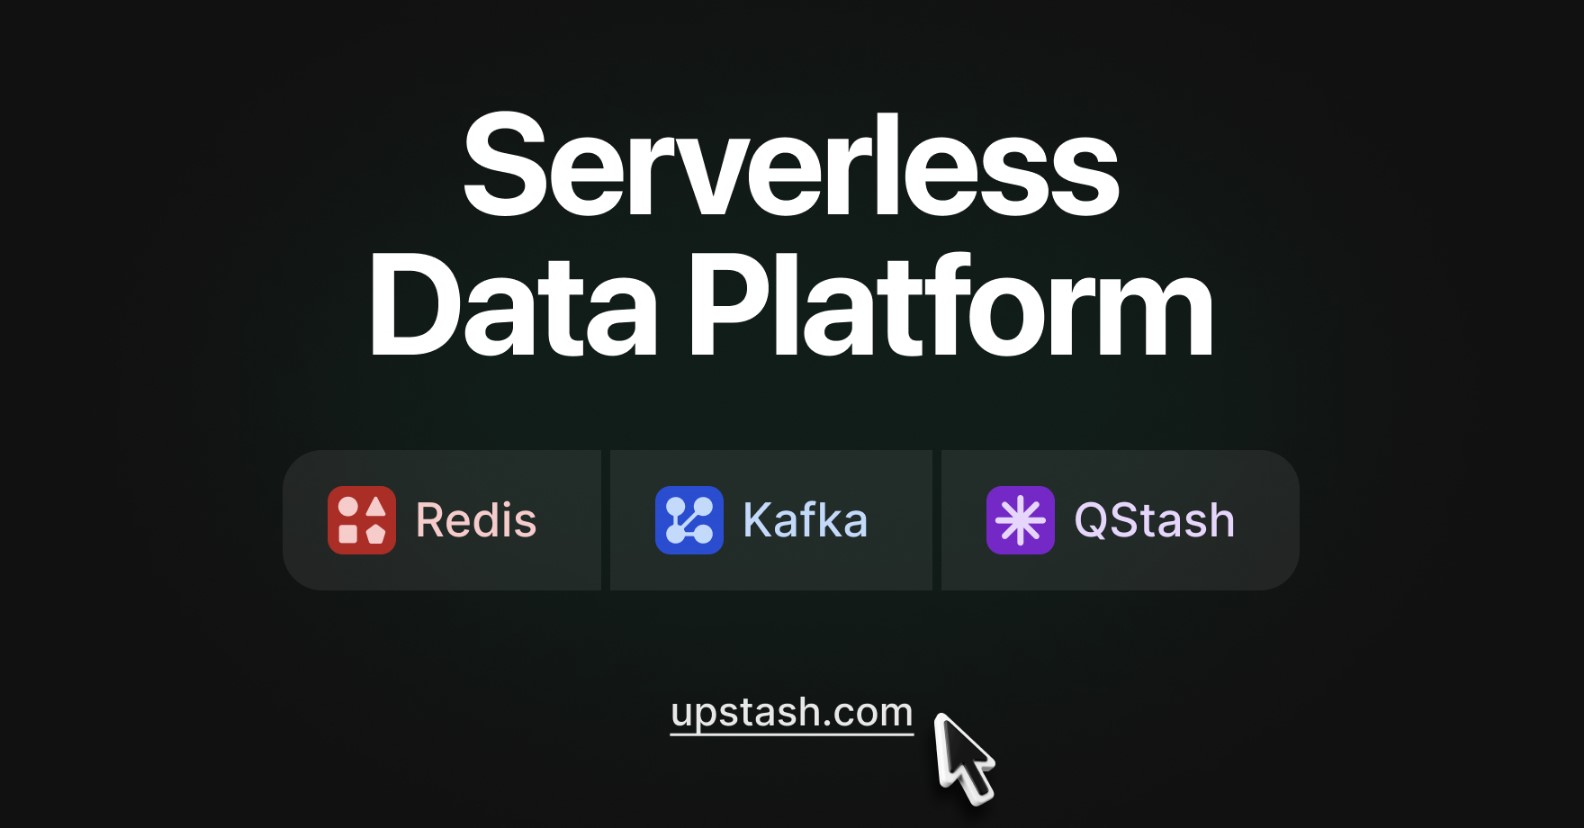 Upstash’s Serverless Data Platform Achieves $1M ARR In Just Two Years